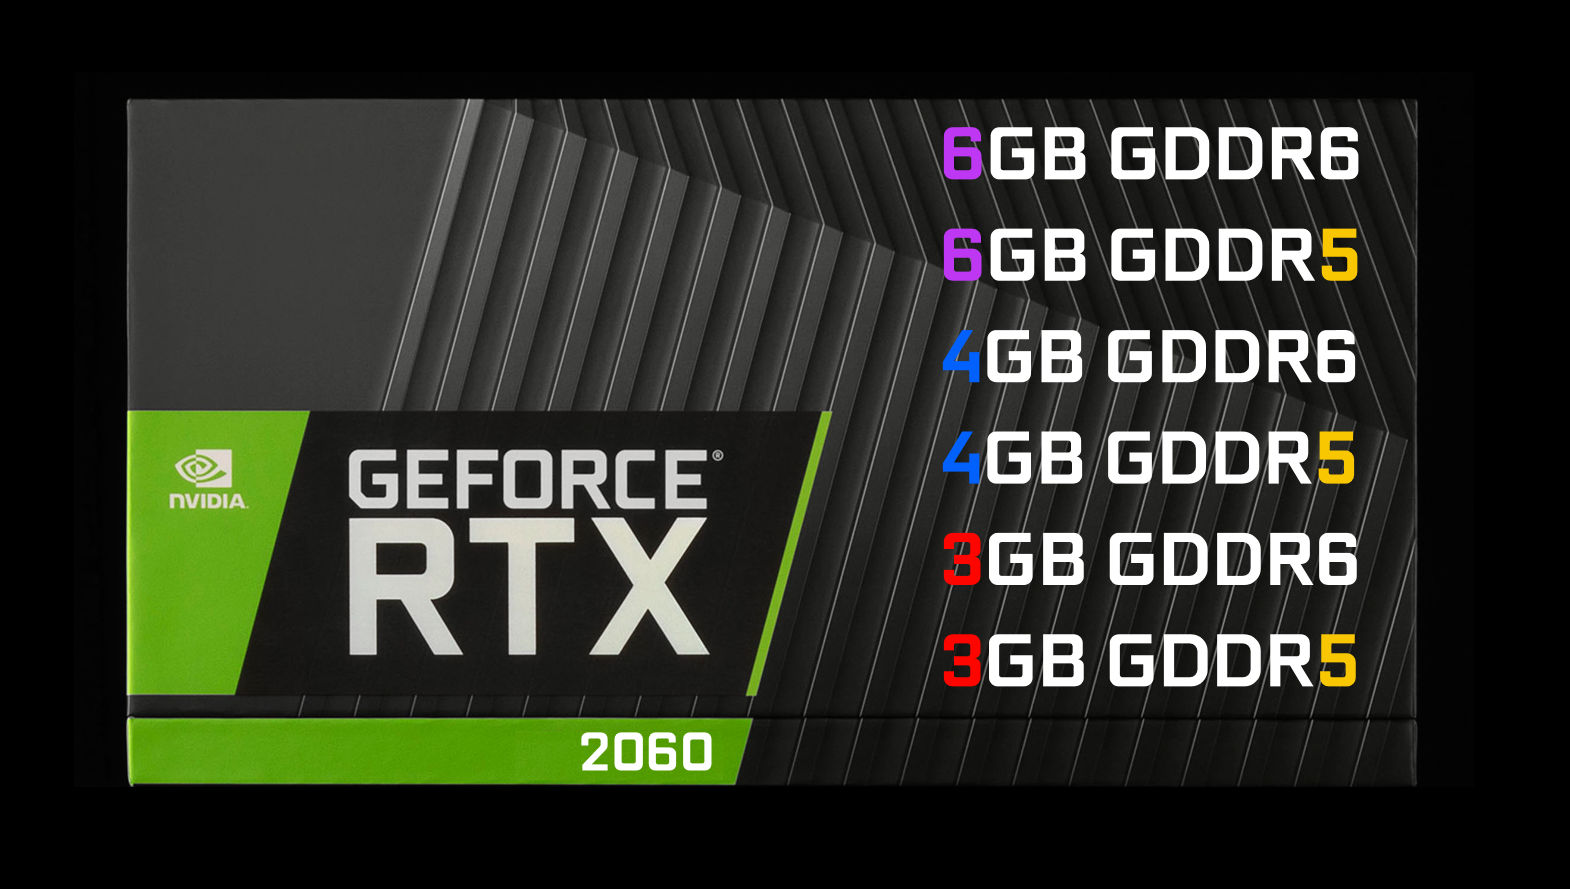 GIGABYTE submits GeForce RTX 2060 6GB 